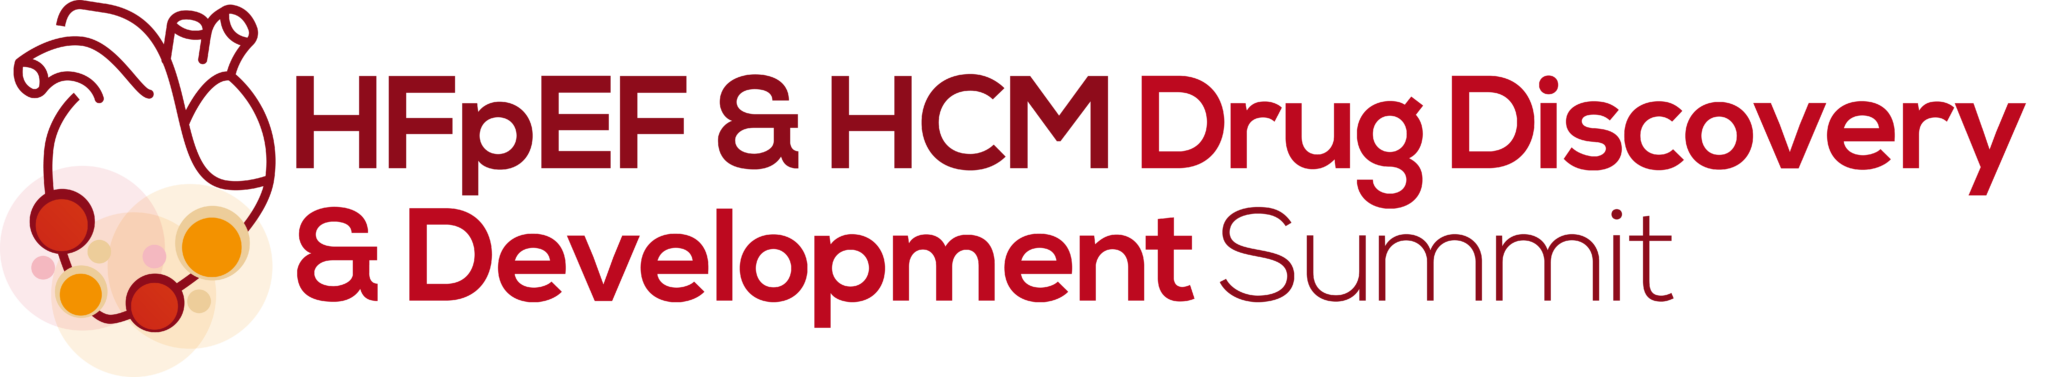 HW220916-HFpEF-HCM-Drug-Discovery-Development-Summit-logo-2048x377